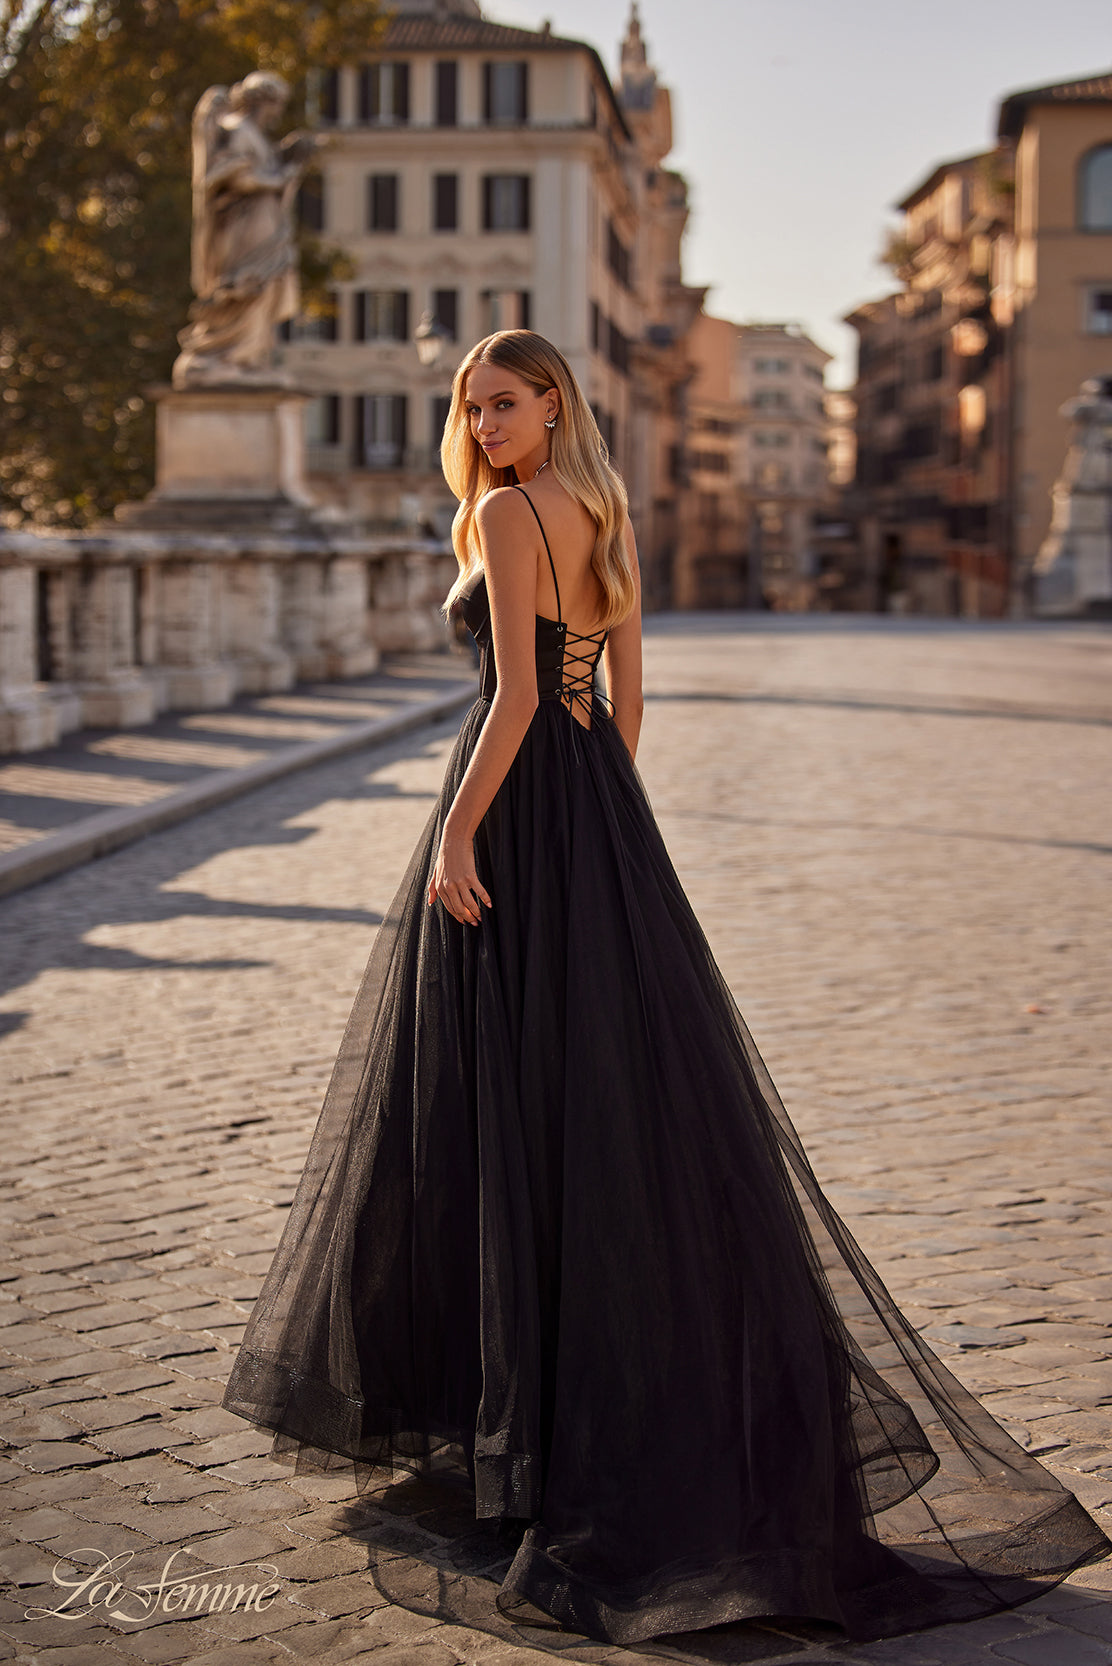 La-Femme-32065-Sweetheart-Neckline-Lace-up-Back-High-Slit-Jersey-Tulle-A-Line-Black-Evening-Dress-B-Chic-Fashions-Prom-Dress